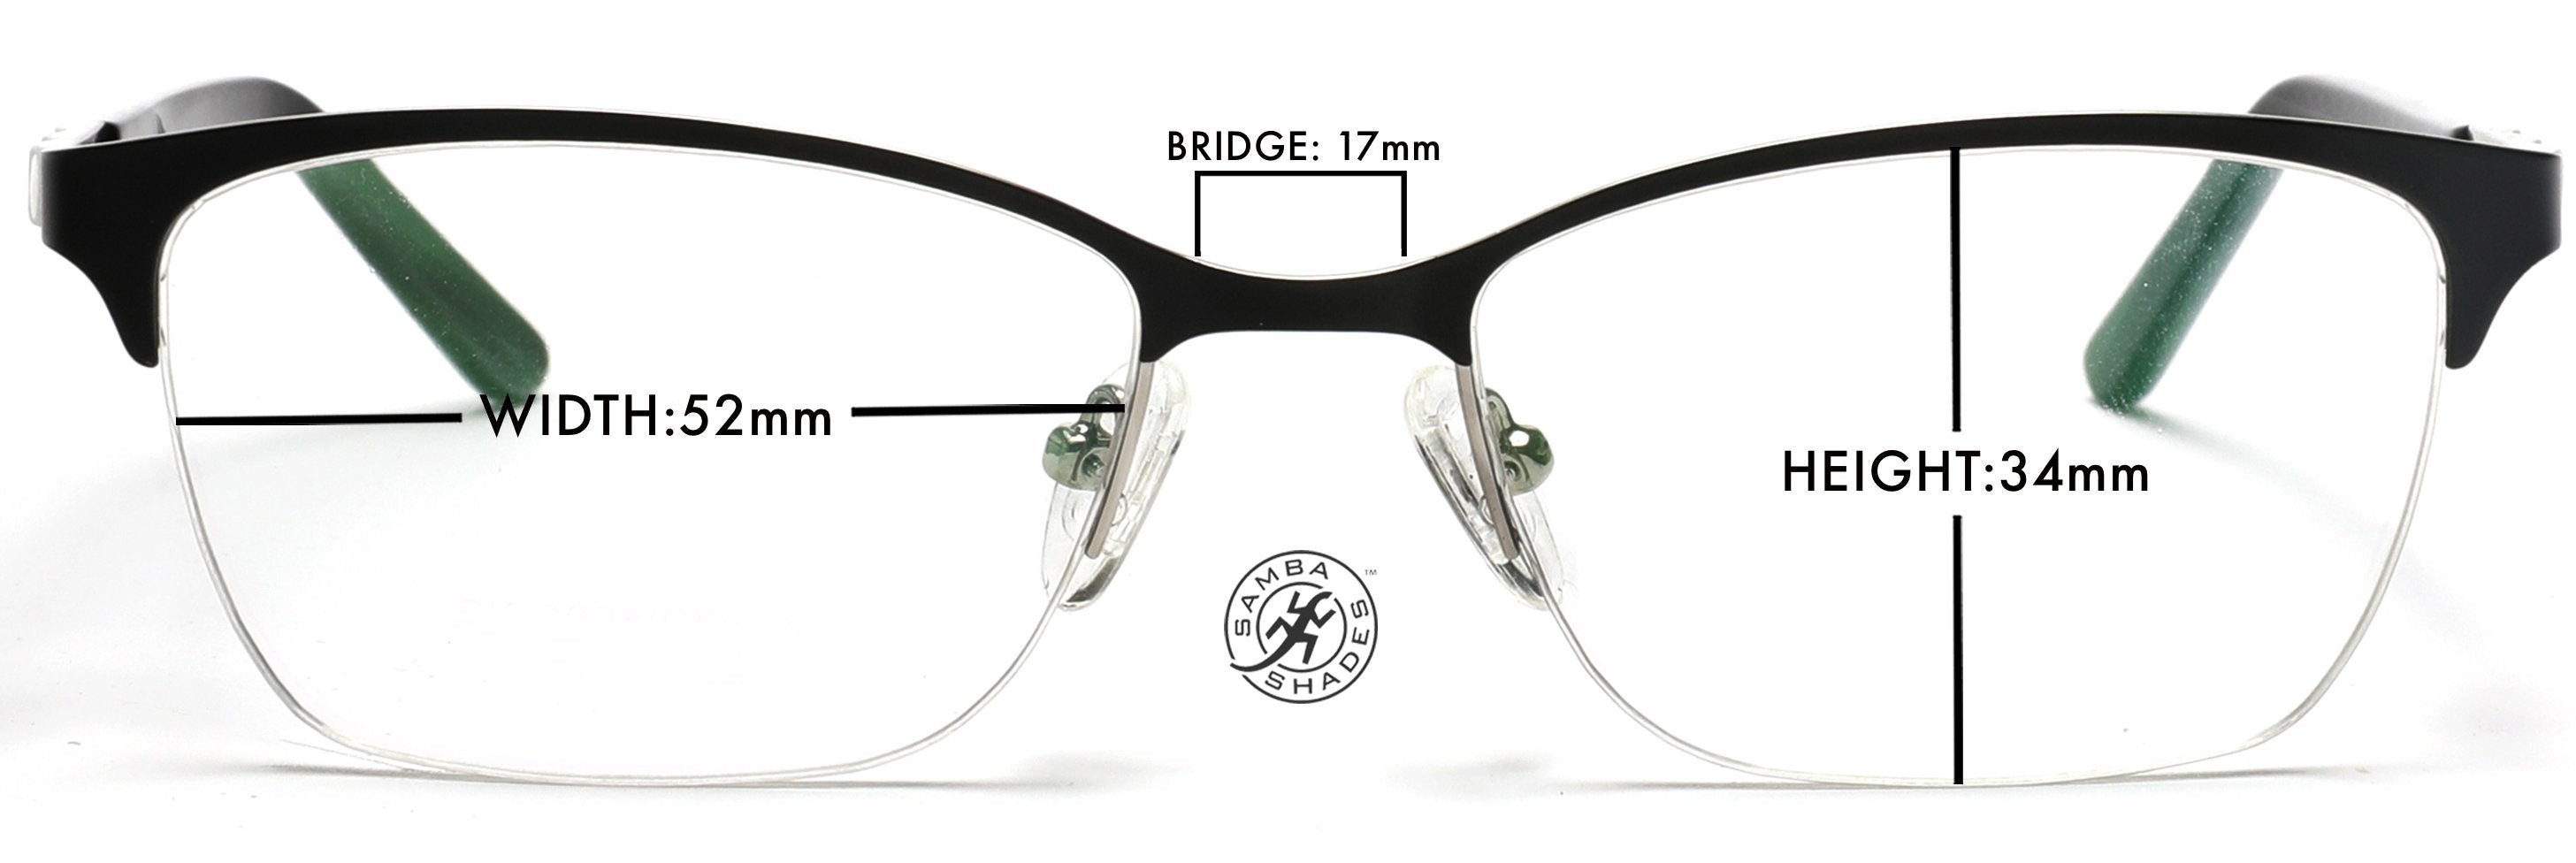 Tango Optics Cateye Metal Eyeglasses Frame Luxe RX Stainless Helen Brooke Taussig Black For Prescription Lens-Samba Shades